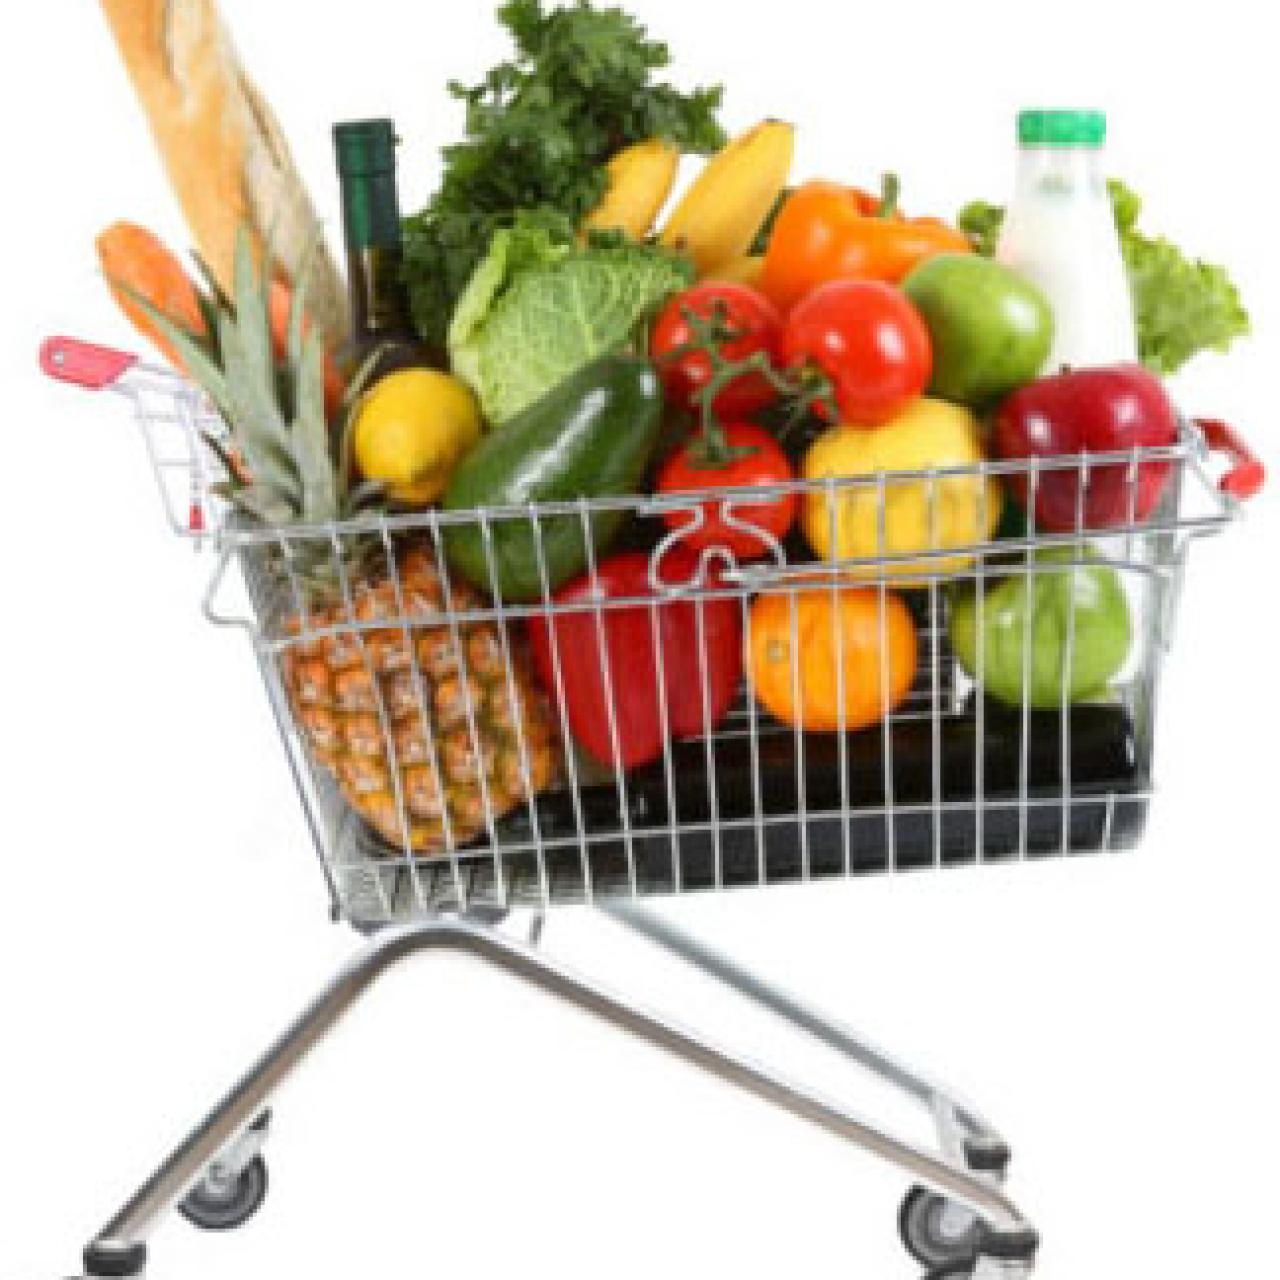 Shoppers Choose Healthier Groceries When Supermarkets Place Fruit